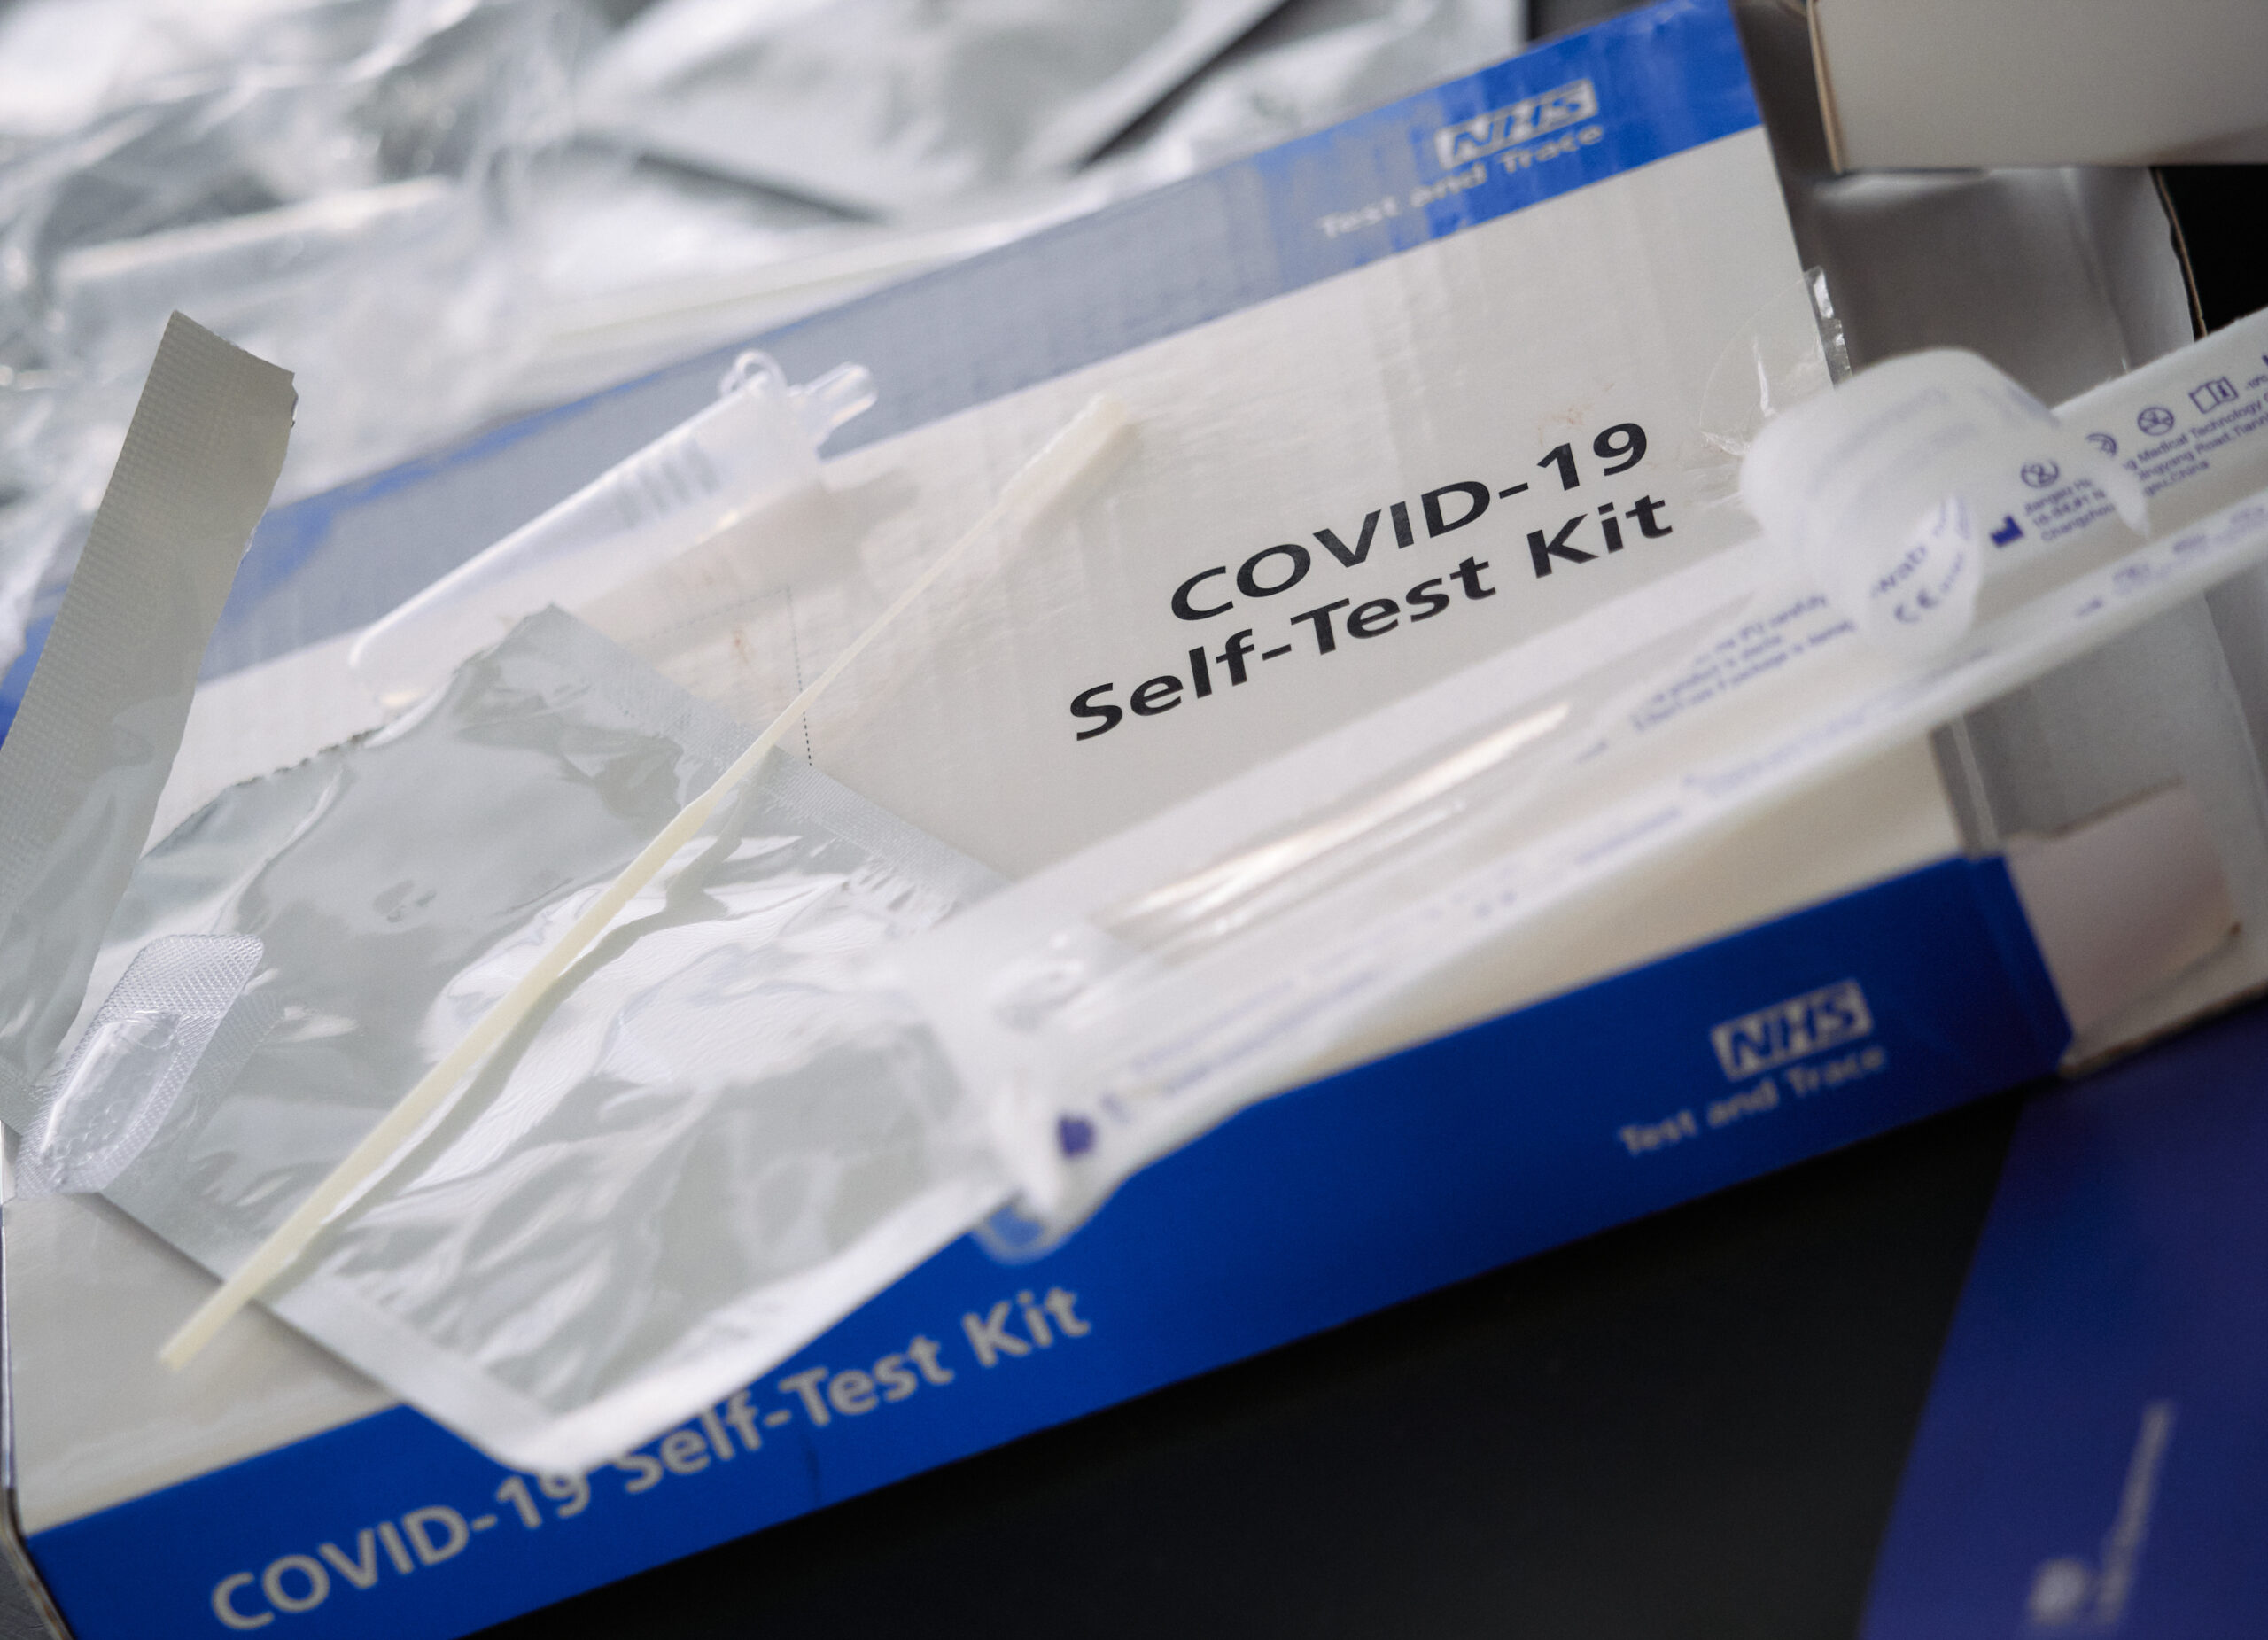 Covid 19 self test kit